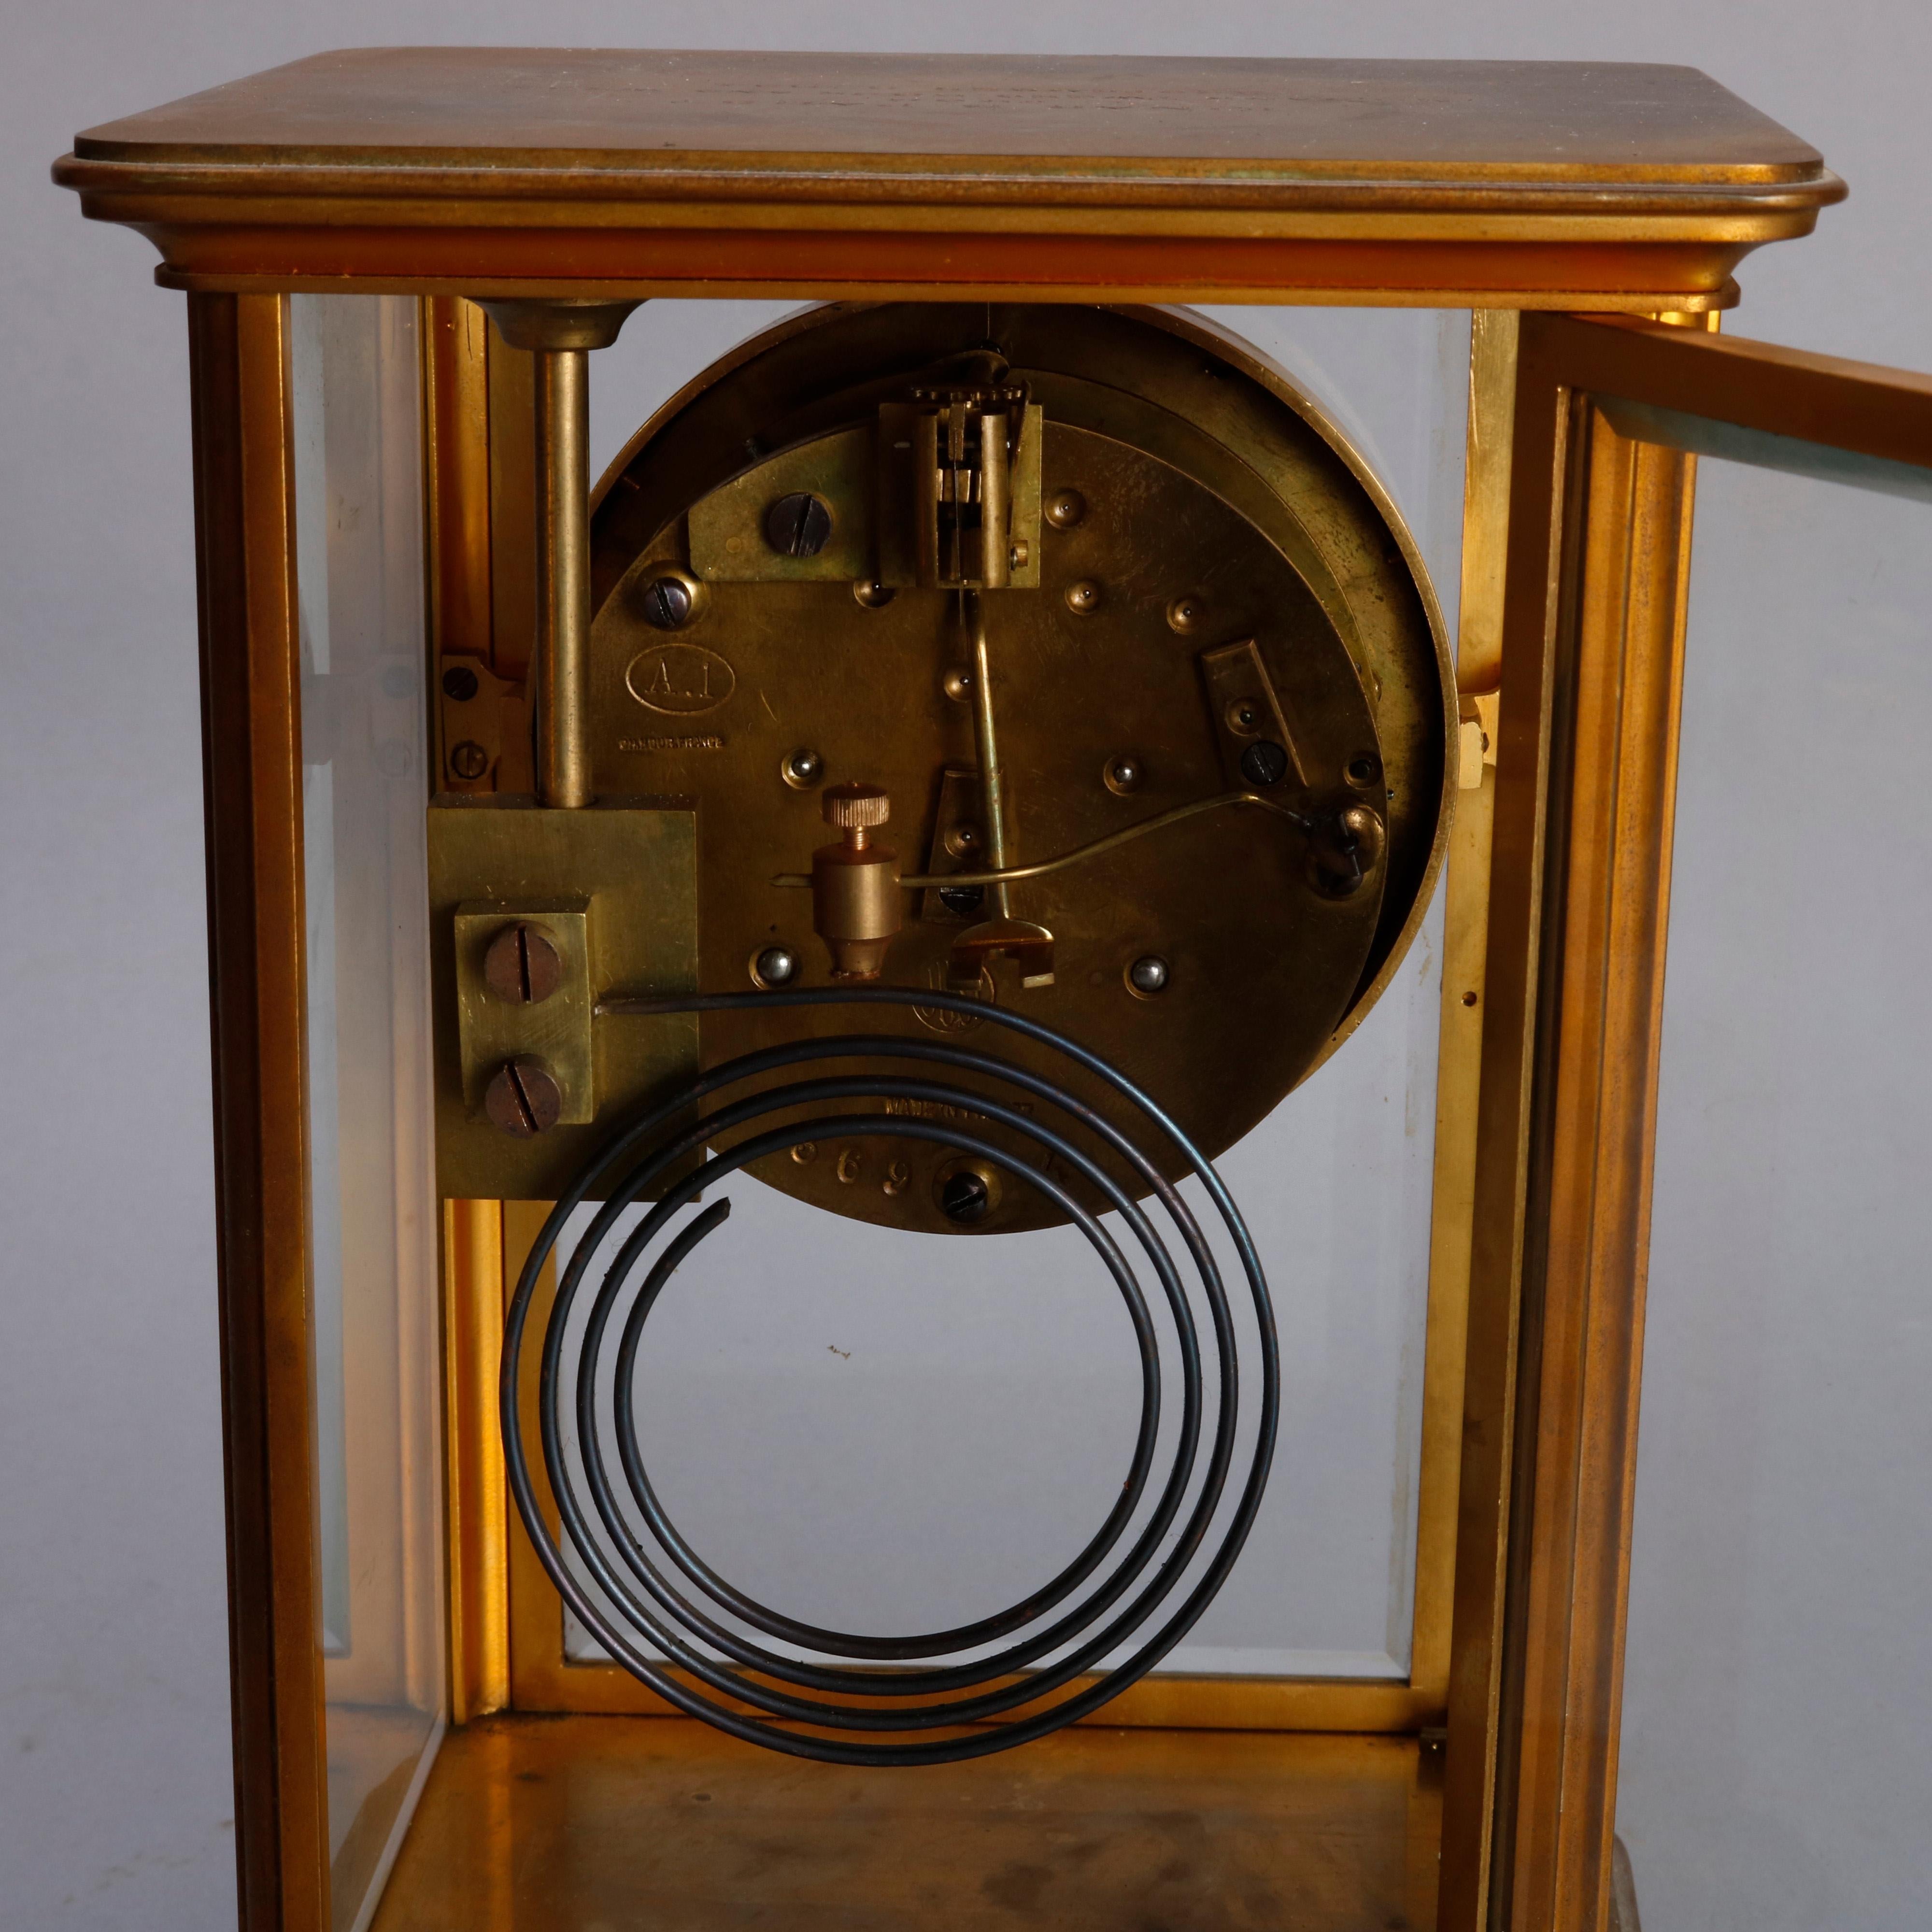 North American Antique Tiffany & Co Brass and Crystal Regulator Clock, circa 1890